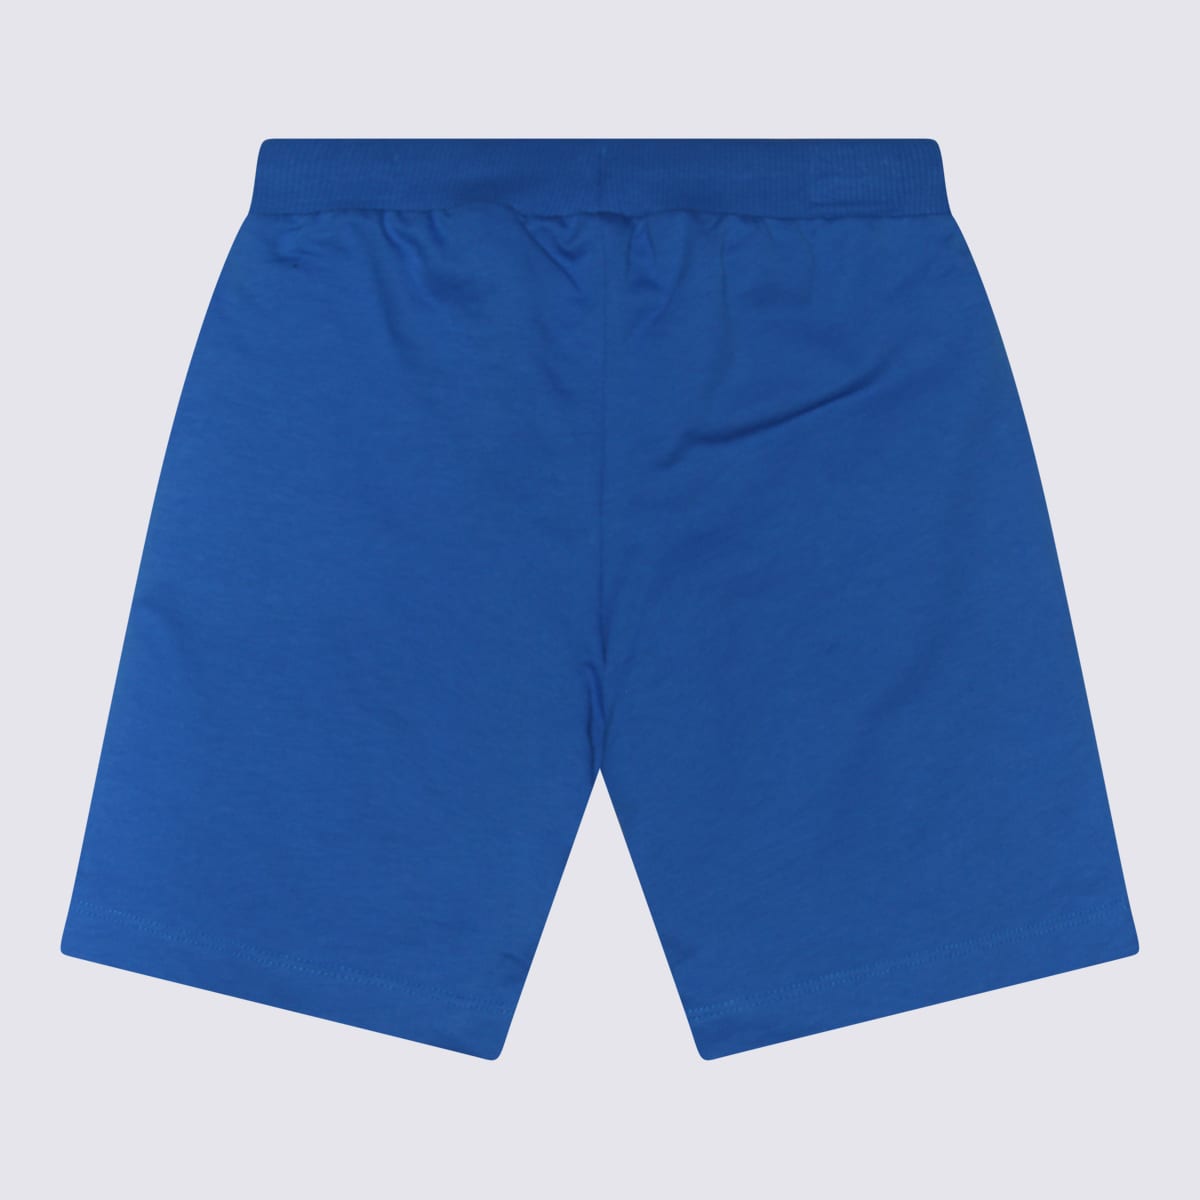 Shop Moschino Blue Cotton Shorts